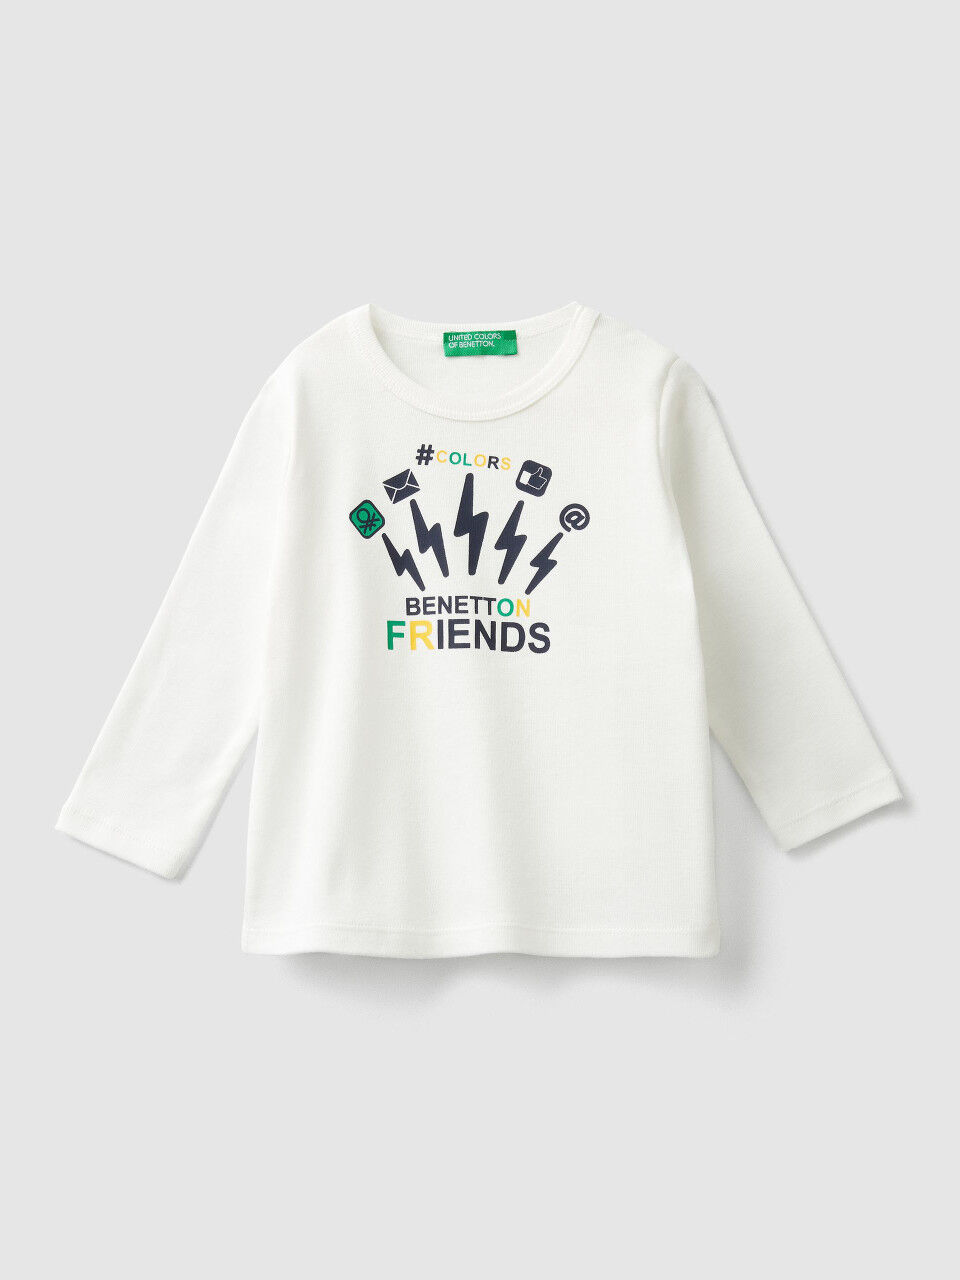 Historicus Oordeel school Kid Boys' T-shirts and Shirts Sale Collection 2021 | Benetton